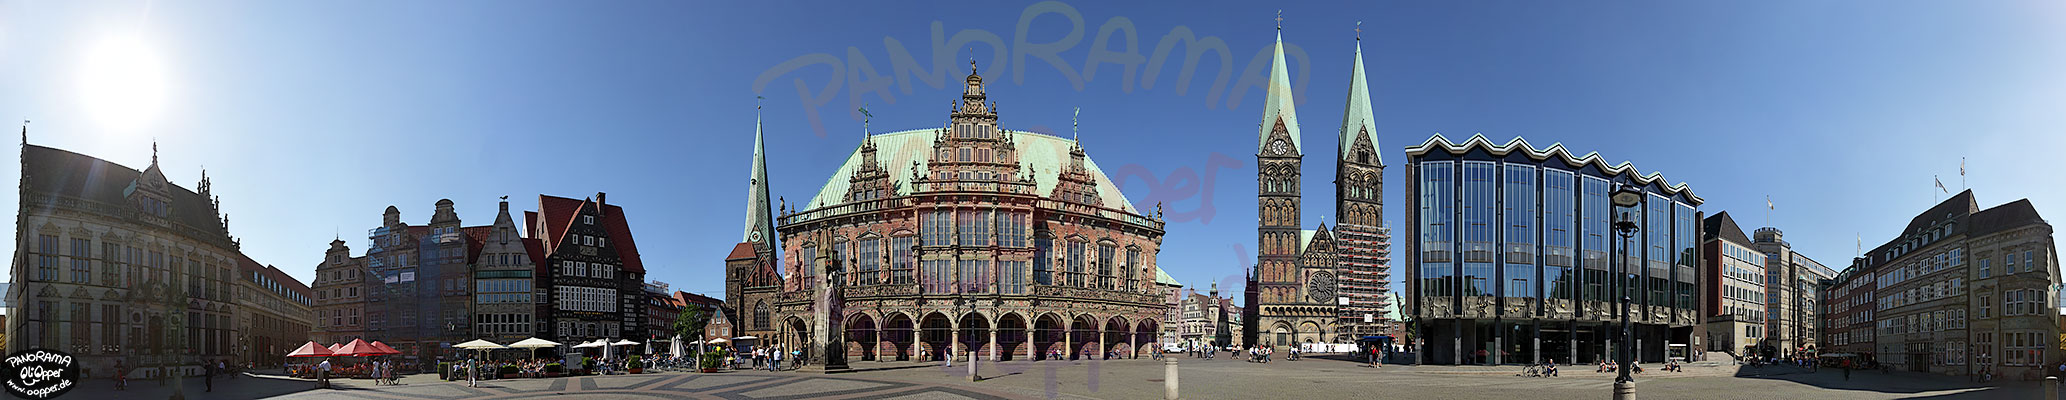 Rathaus Bremen - p013 - (c) by Oliver Opper